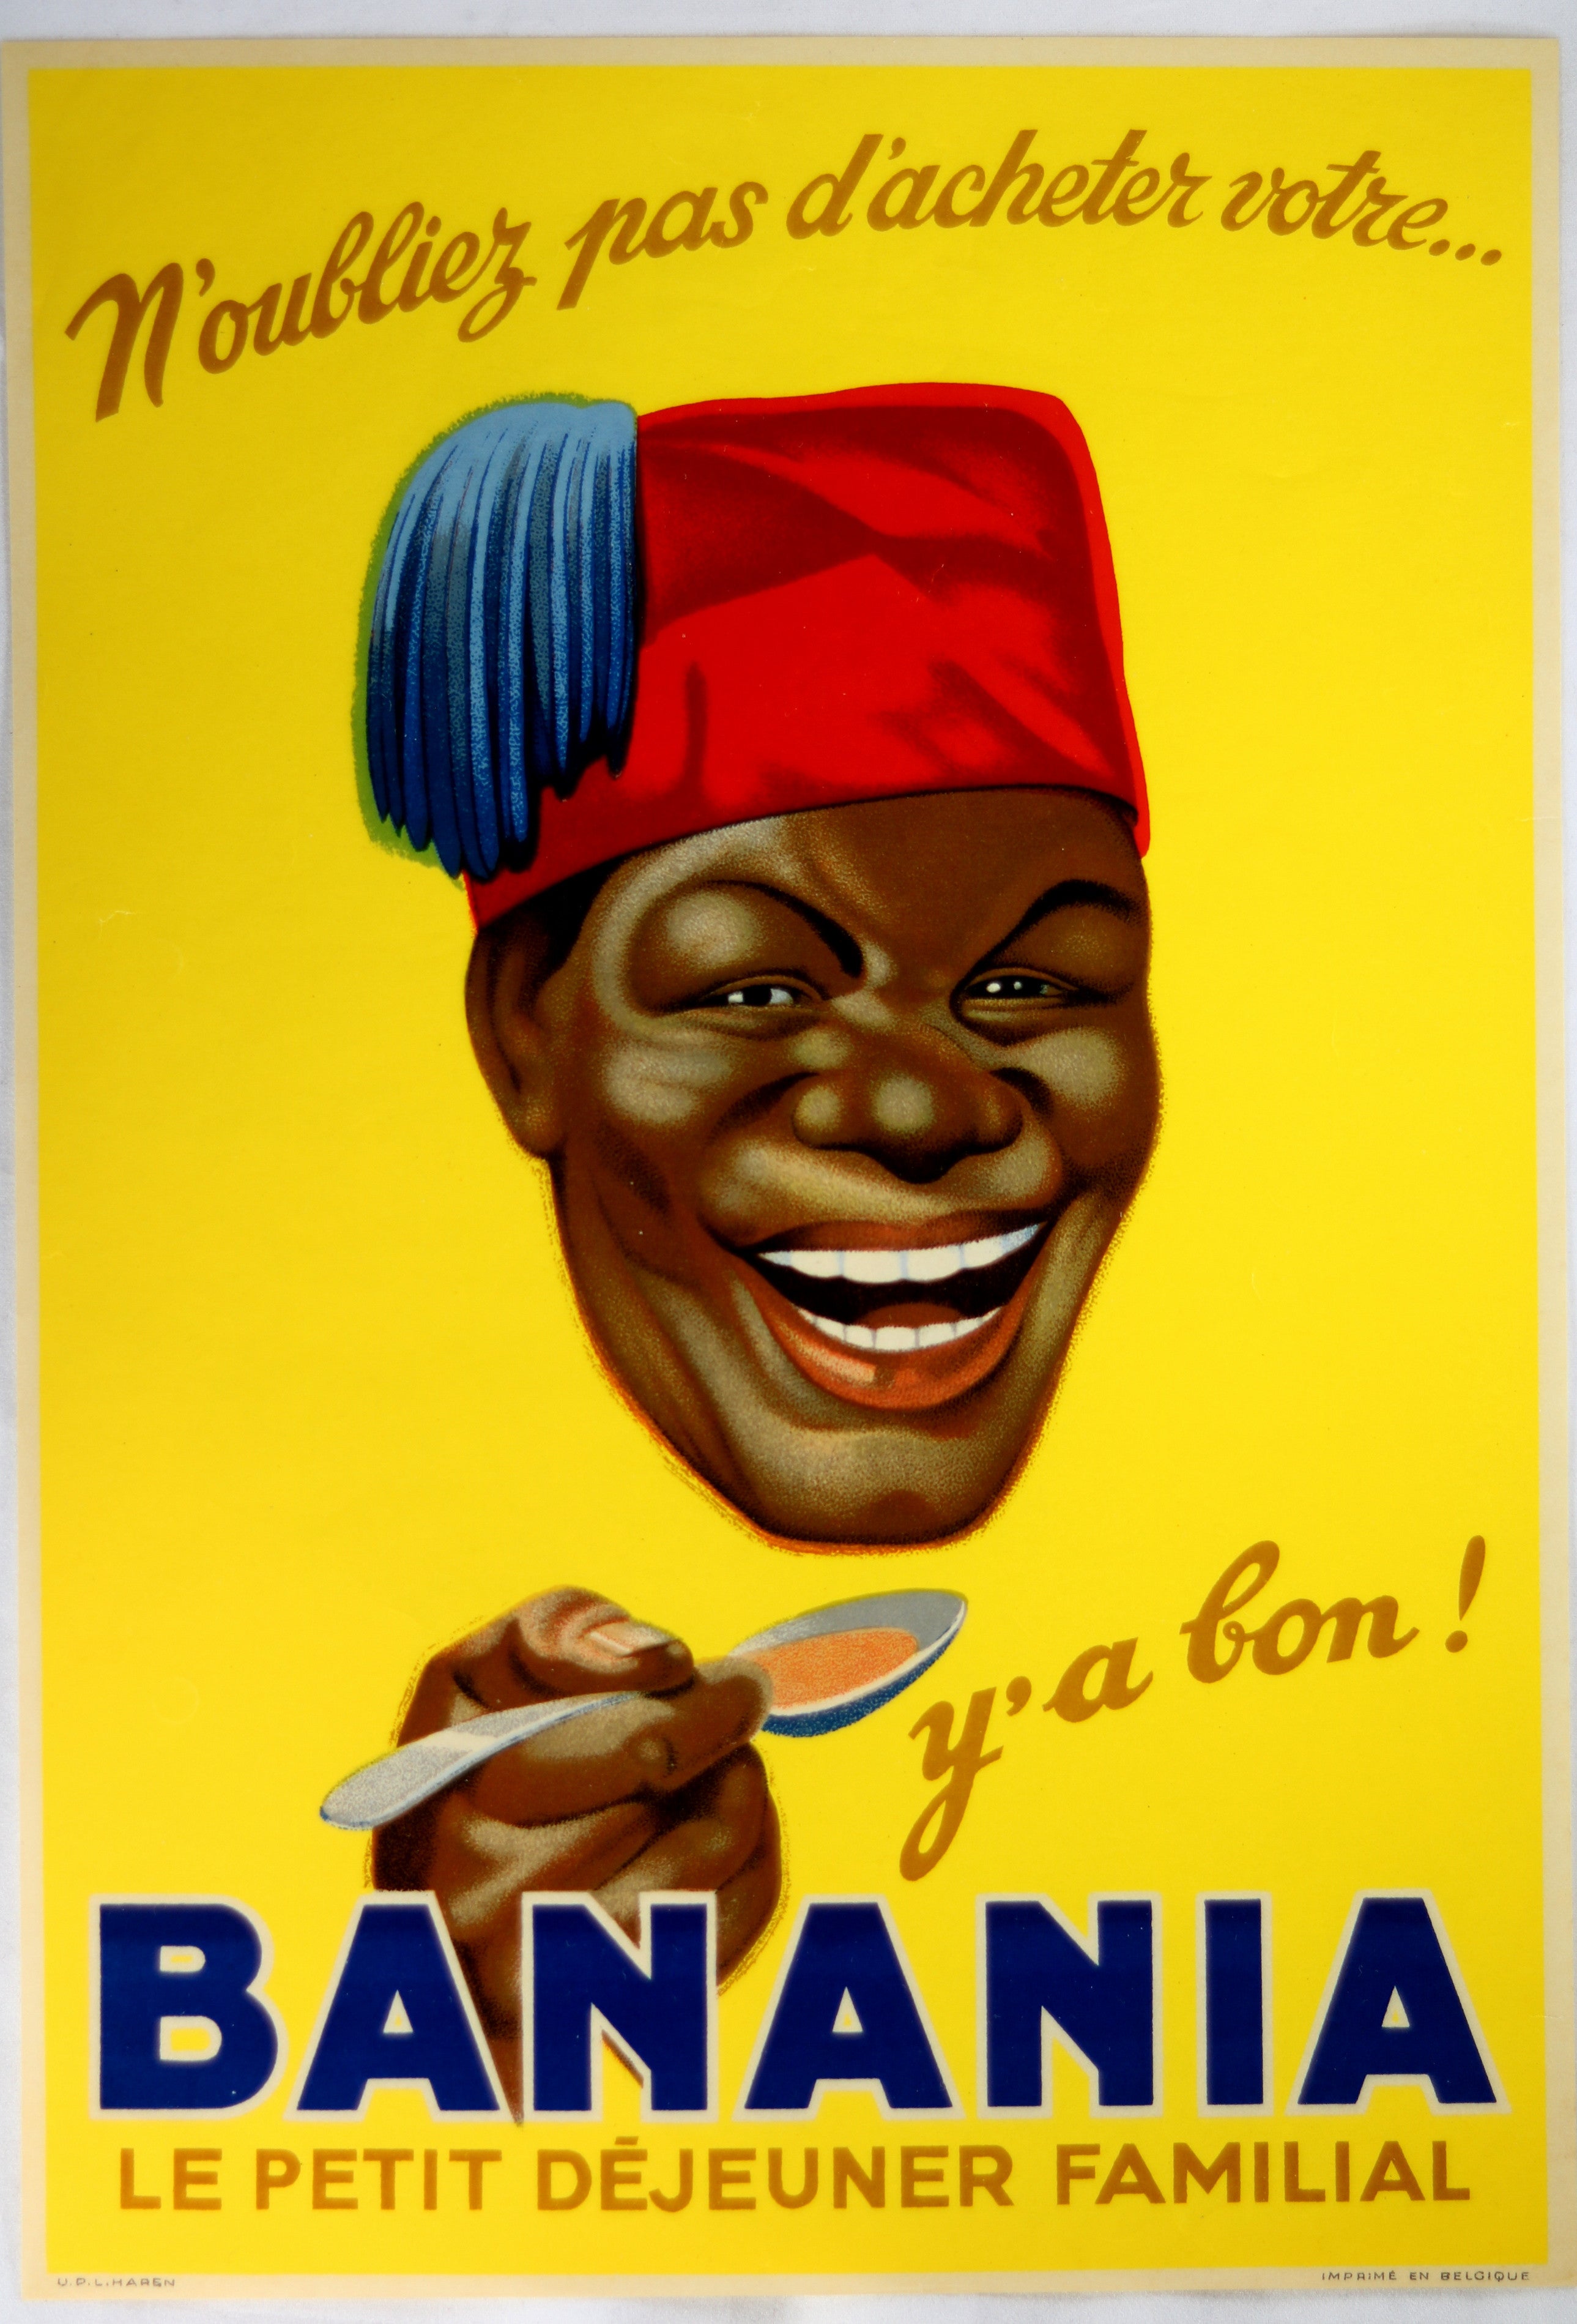 Affichette Banania Dejeuner Familial 1935 Chadbourne Antiques And Collectibles 